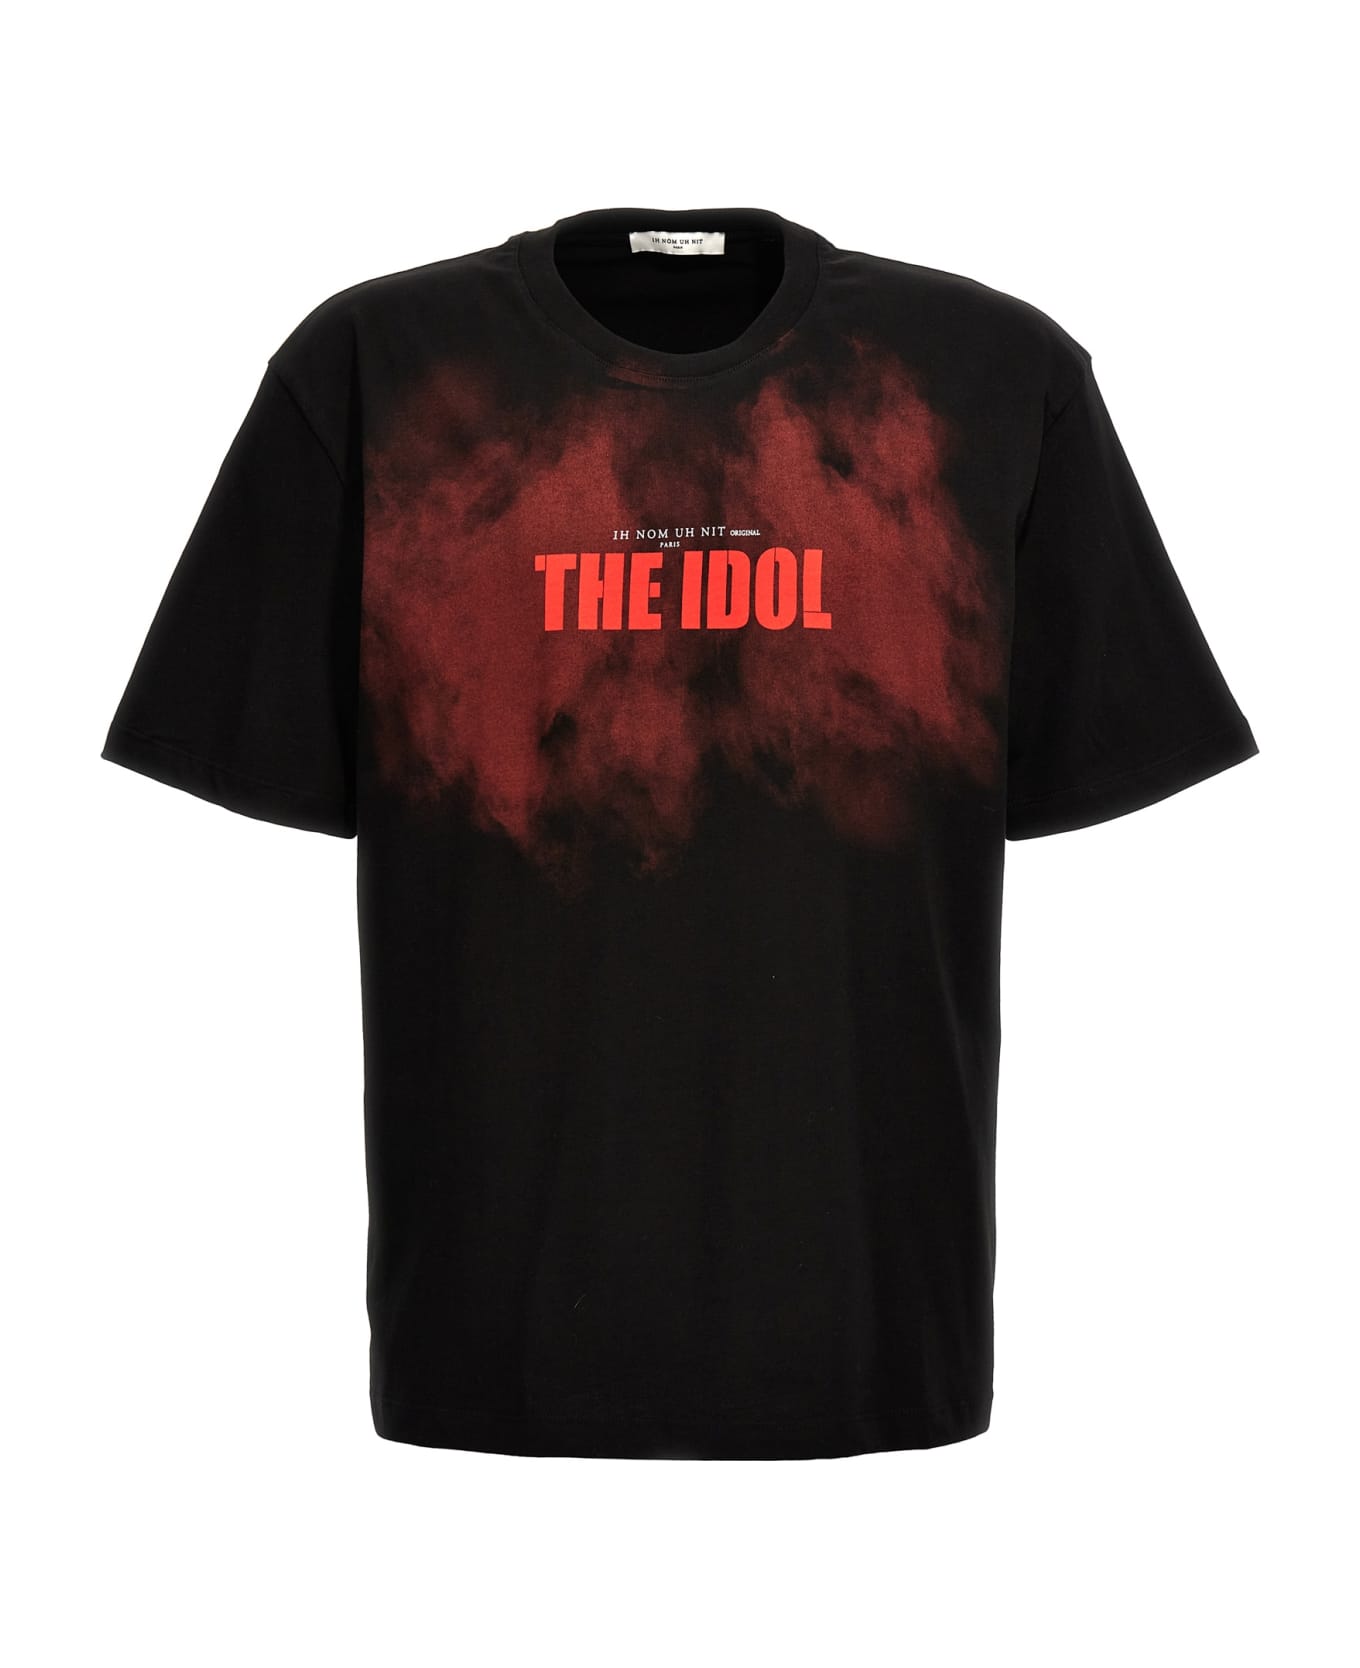 ih nom uh nit 'the Idol' T-shirt - Black